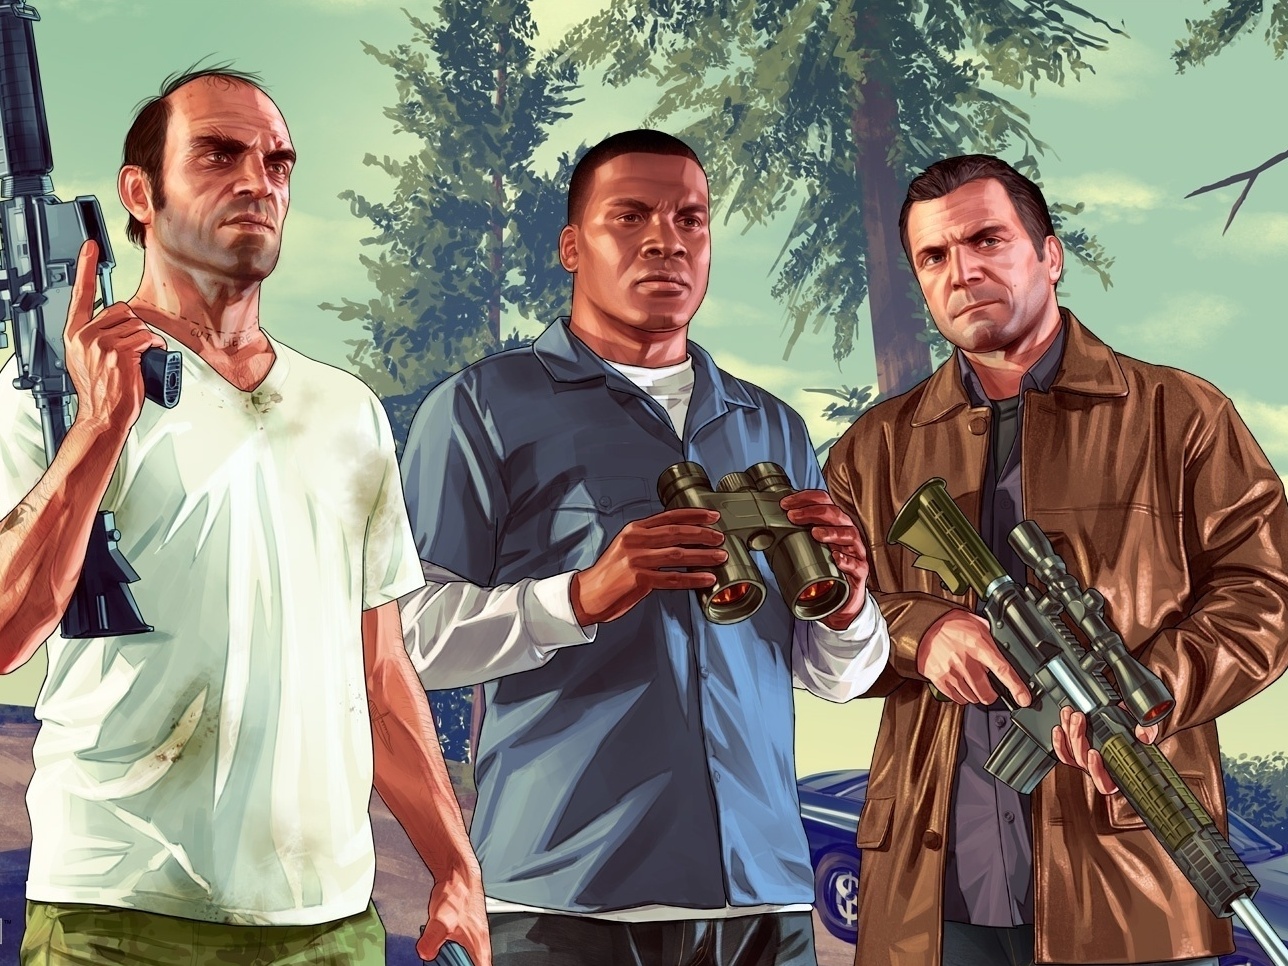 Cheats do GTA 5: todos os códigos e números de telefone de Grand Theft Auto  5 para PS4, XboxOne e PC